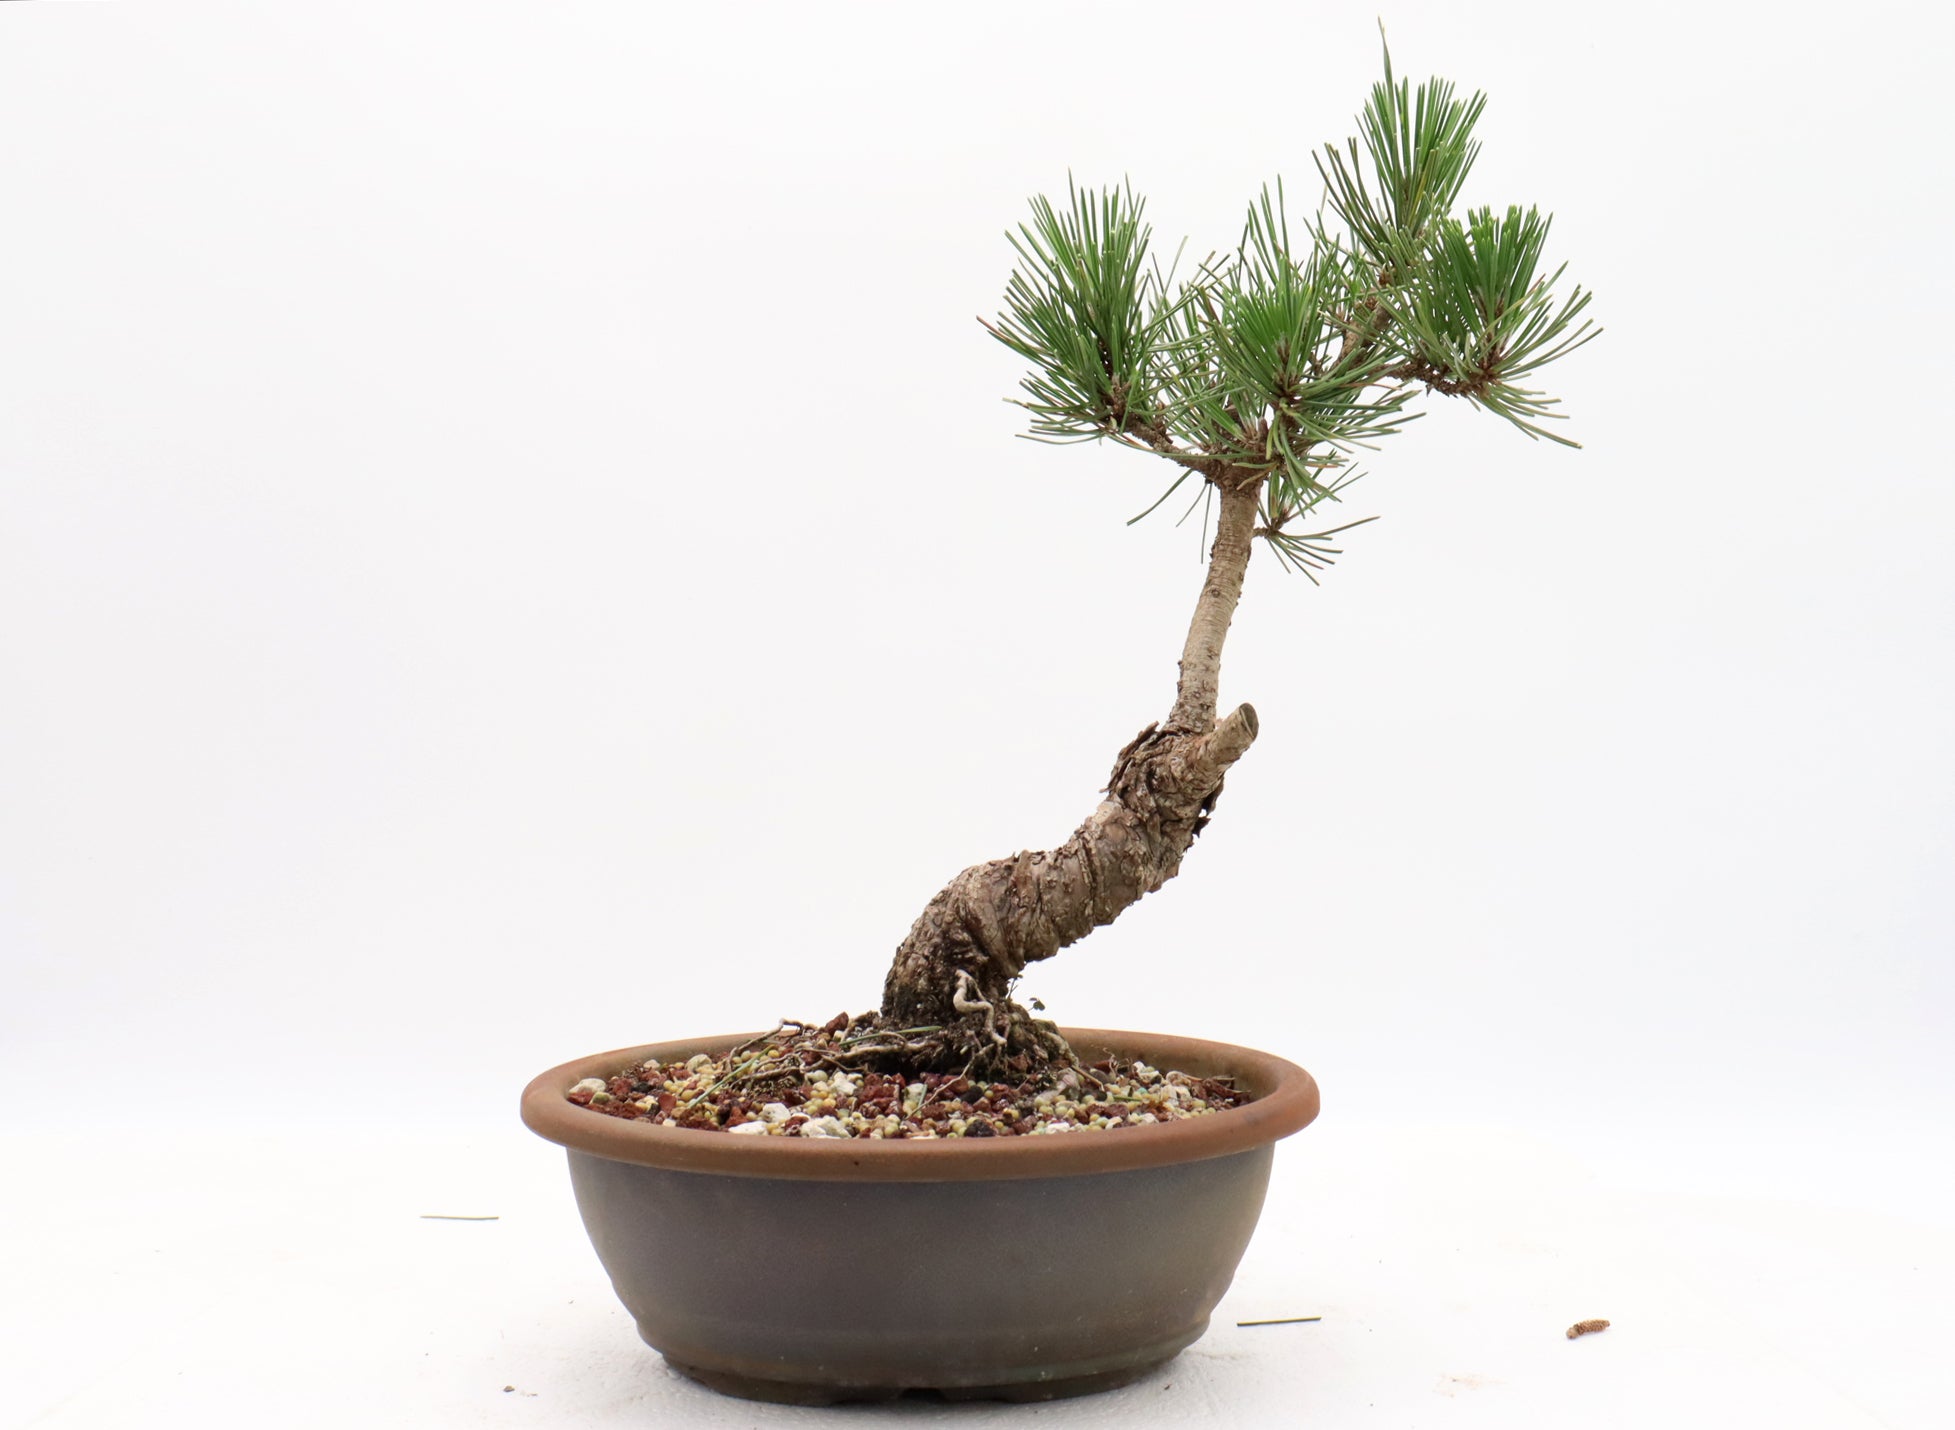 Japanese Black Pine Pre-Bonsai in a 10 Inch Plastic Trainer